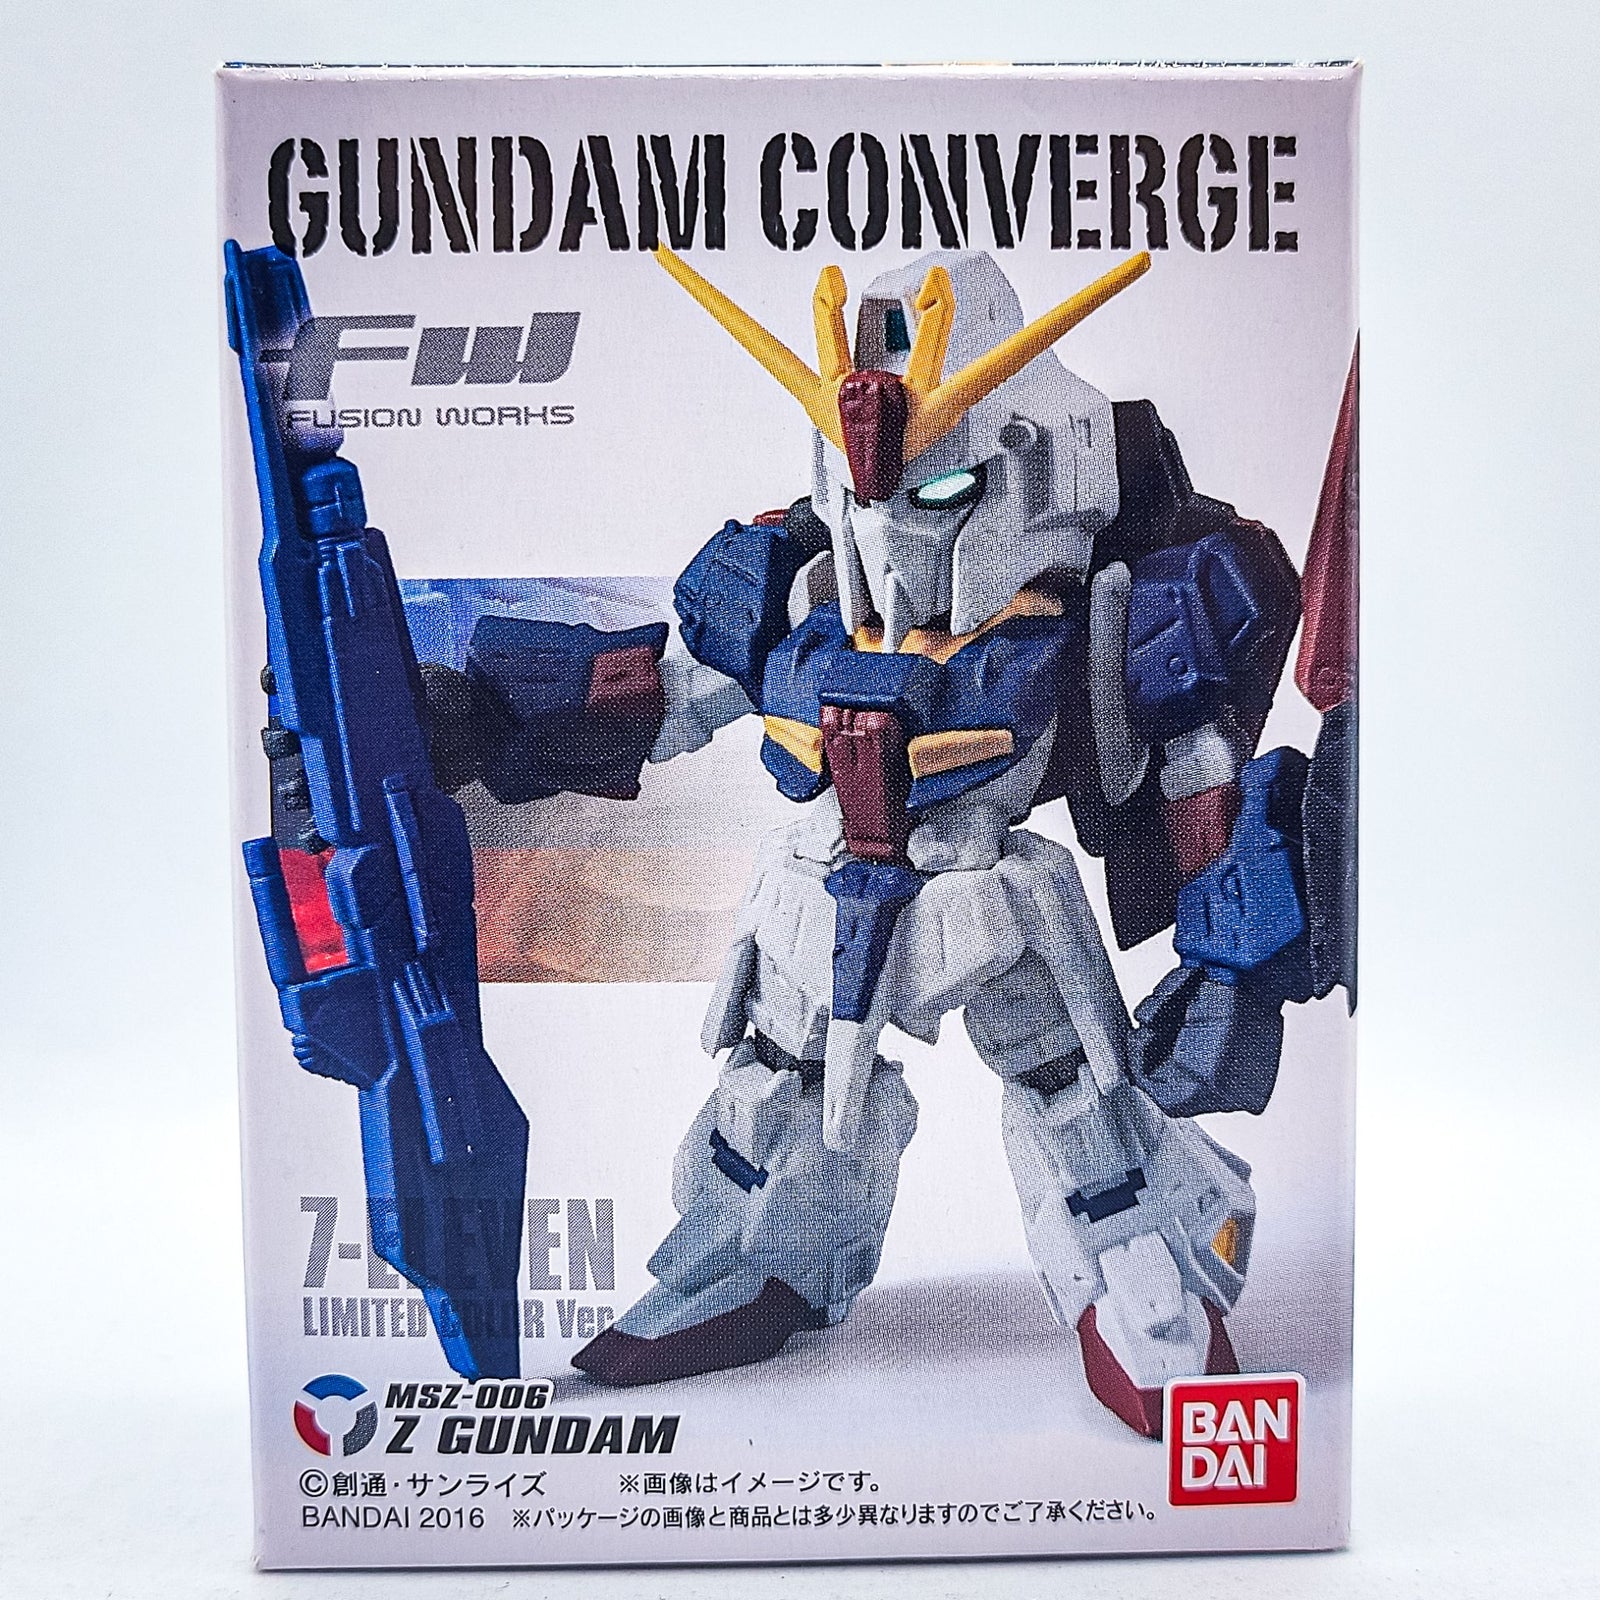 Gundam Converge Zeta Gundam 7-Eleven Limited Color Version by Bandai - 1